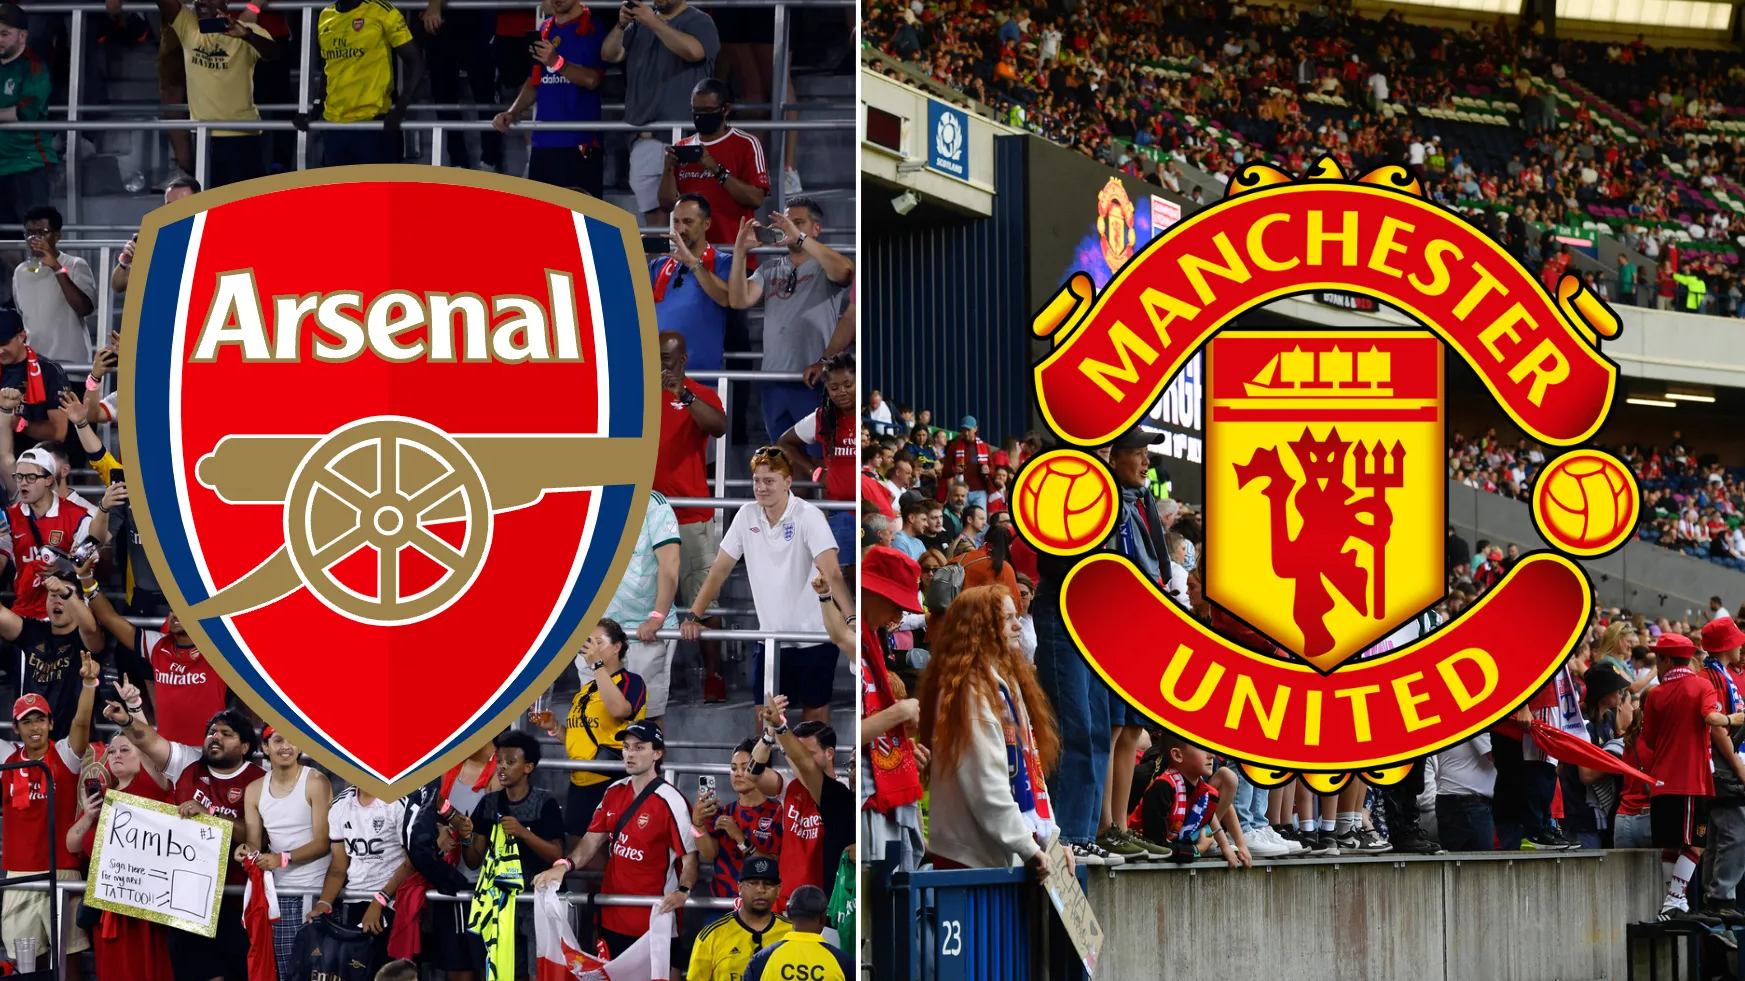 Arsenal vs Manchester United: Tickets, prices & pre-season friendly guide